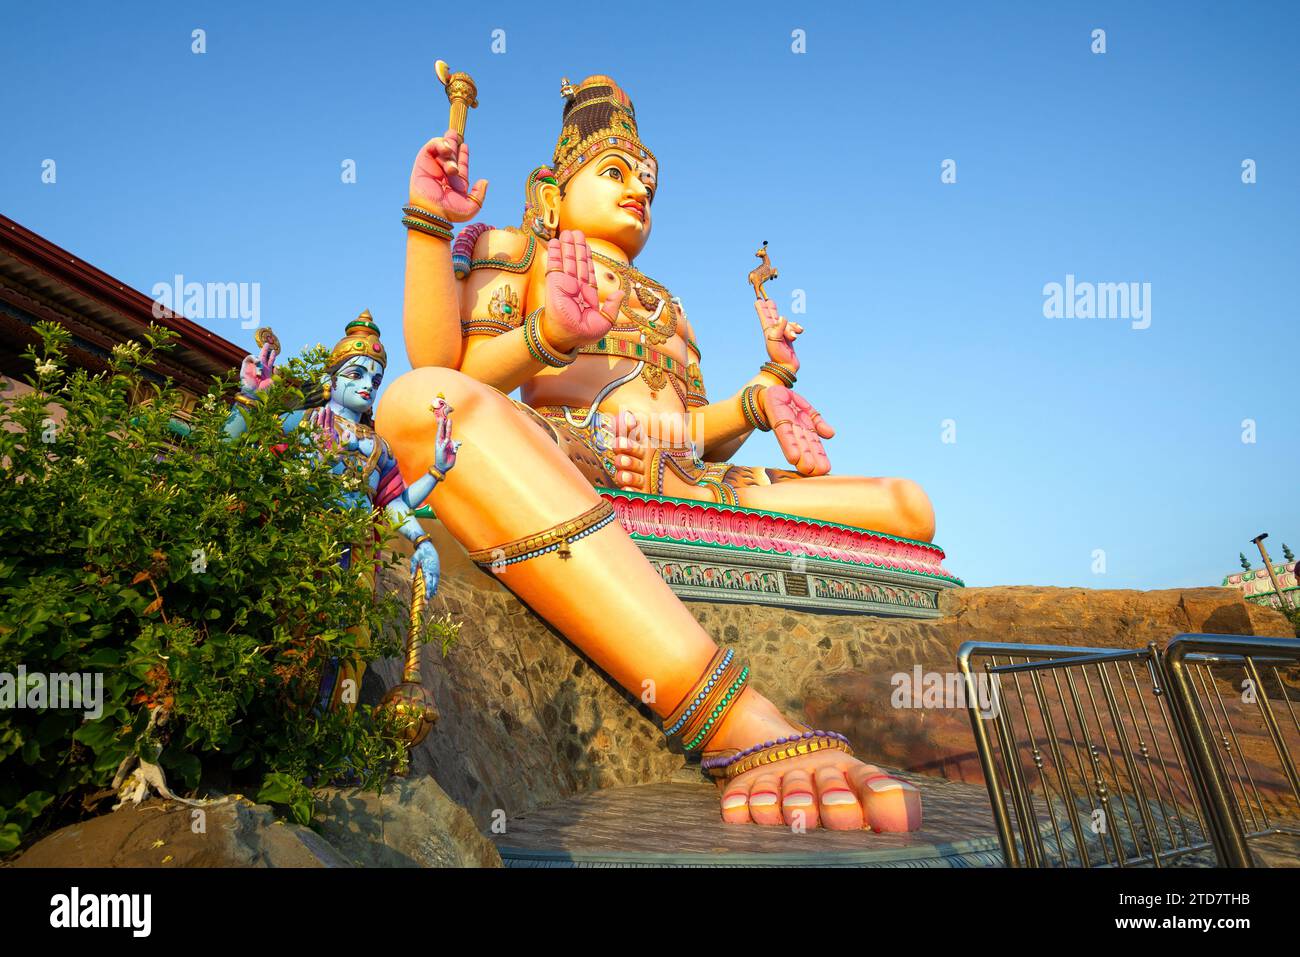 The giant sculpture of Shiva is a sunny day. Koneswarm Kovil Hindu Temple. Trincomalee, Sri Lanka Stock Photo